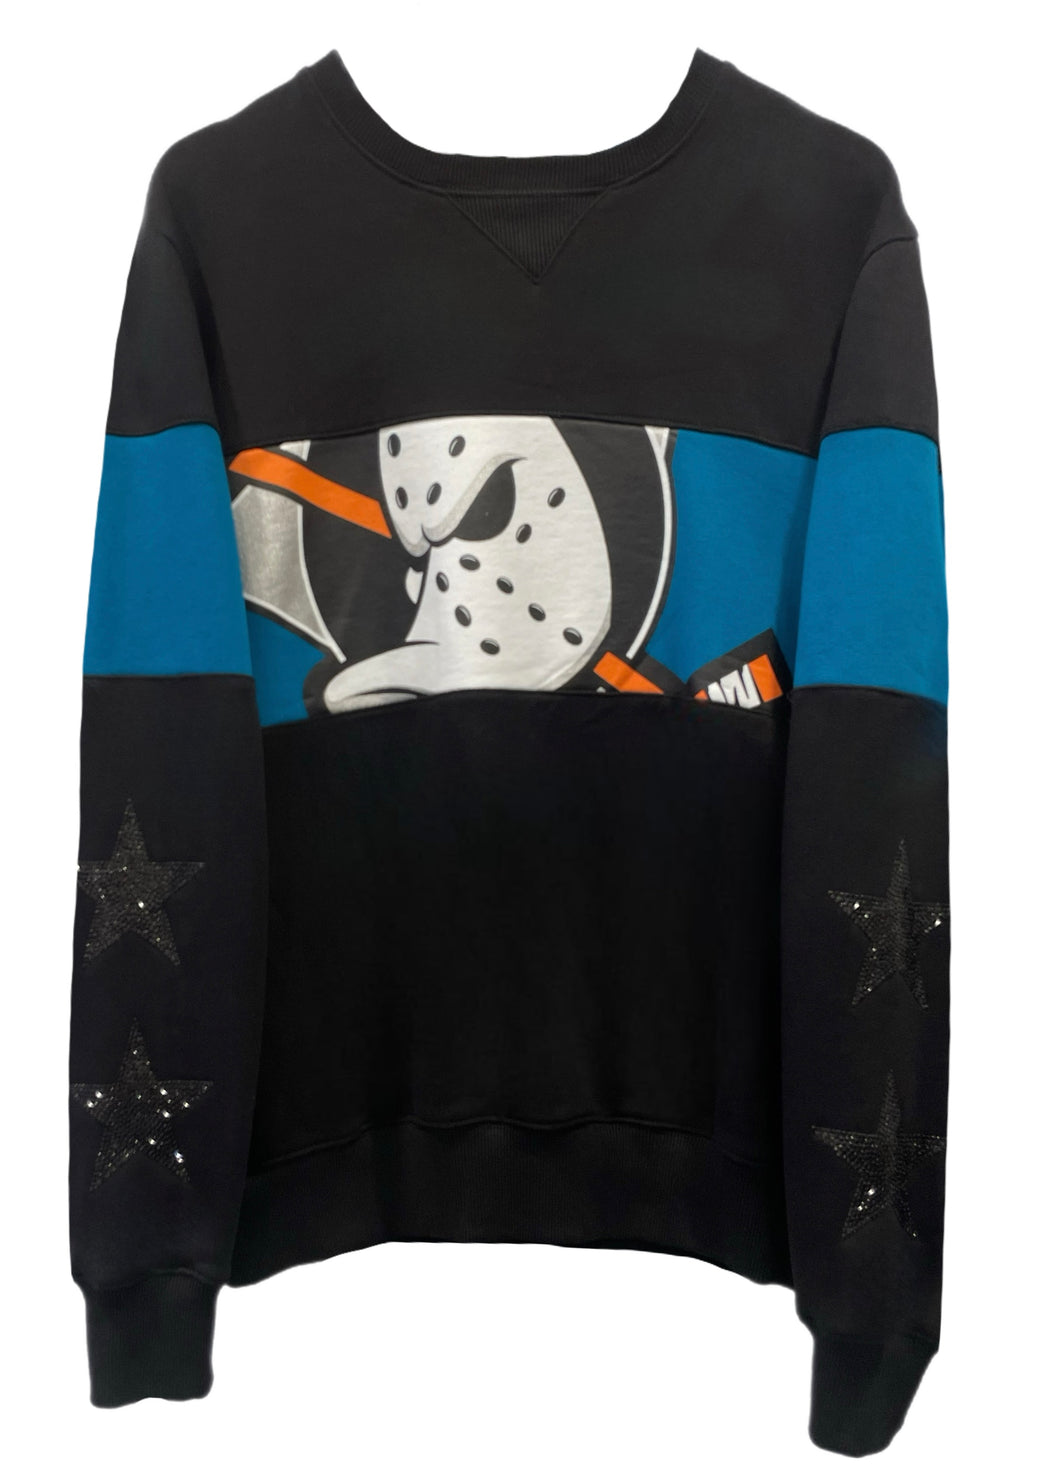 Anaheim Ducks, NHL One of a KIND Vintage “Mighty Ducks” Rare Find Sweatshirt with Black Crystal Star Design - Size: M/L